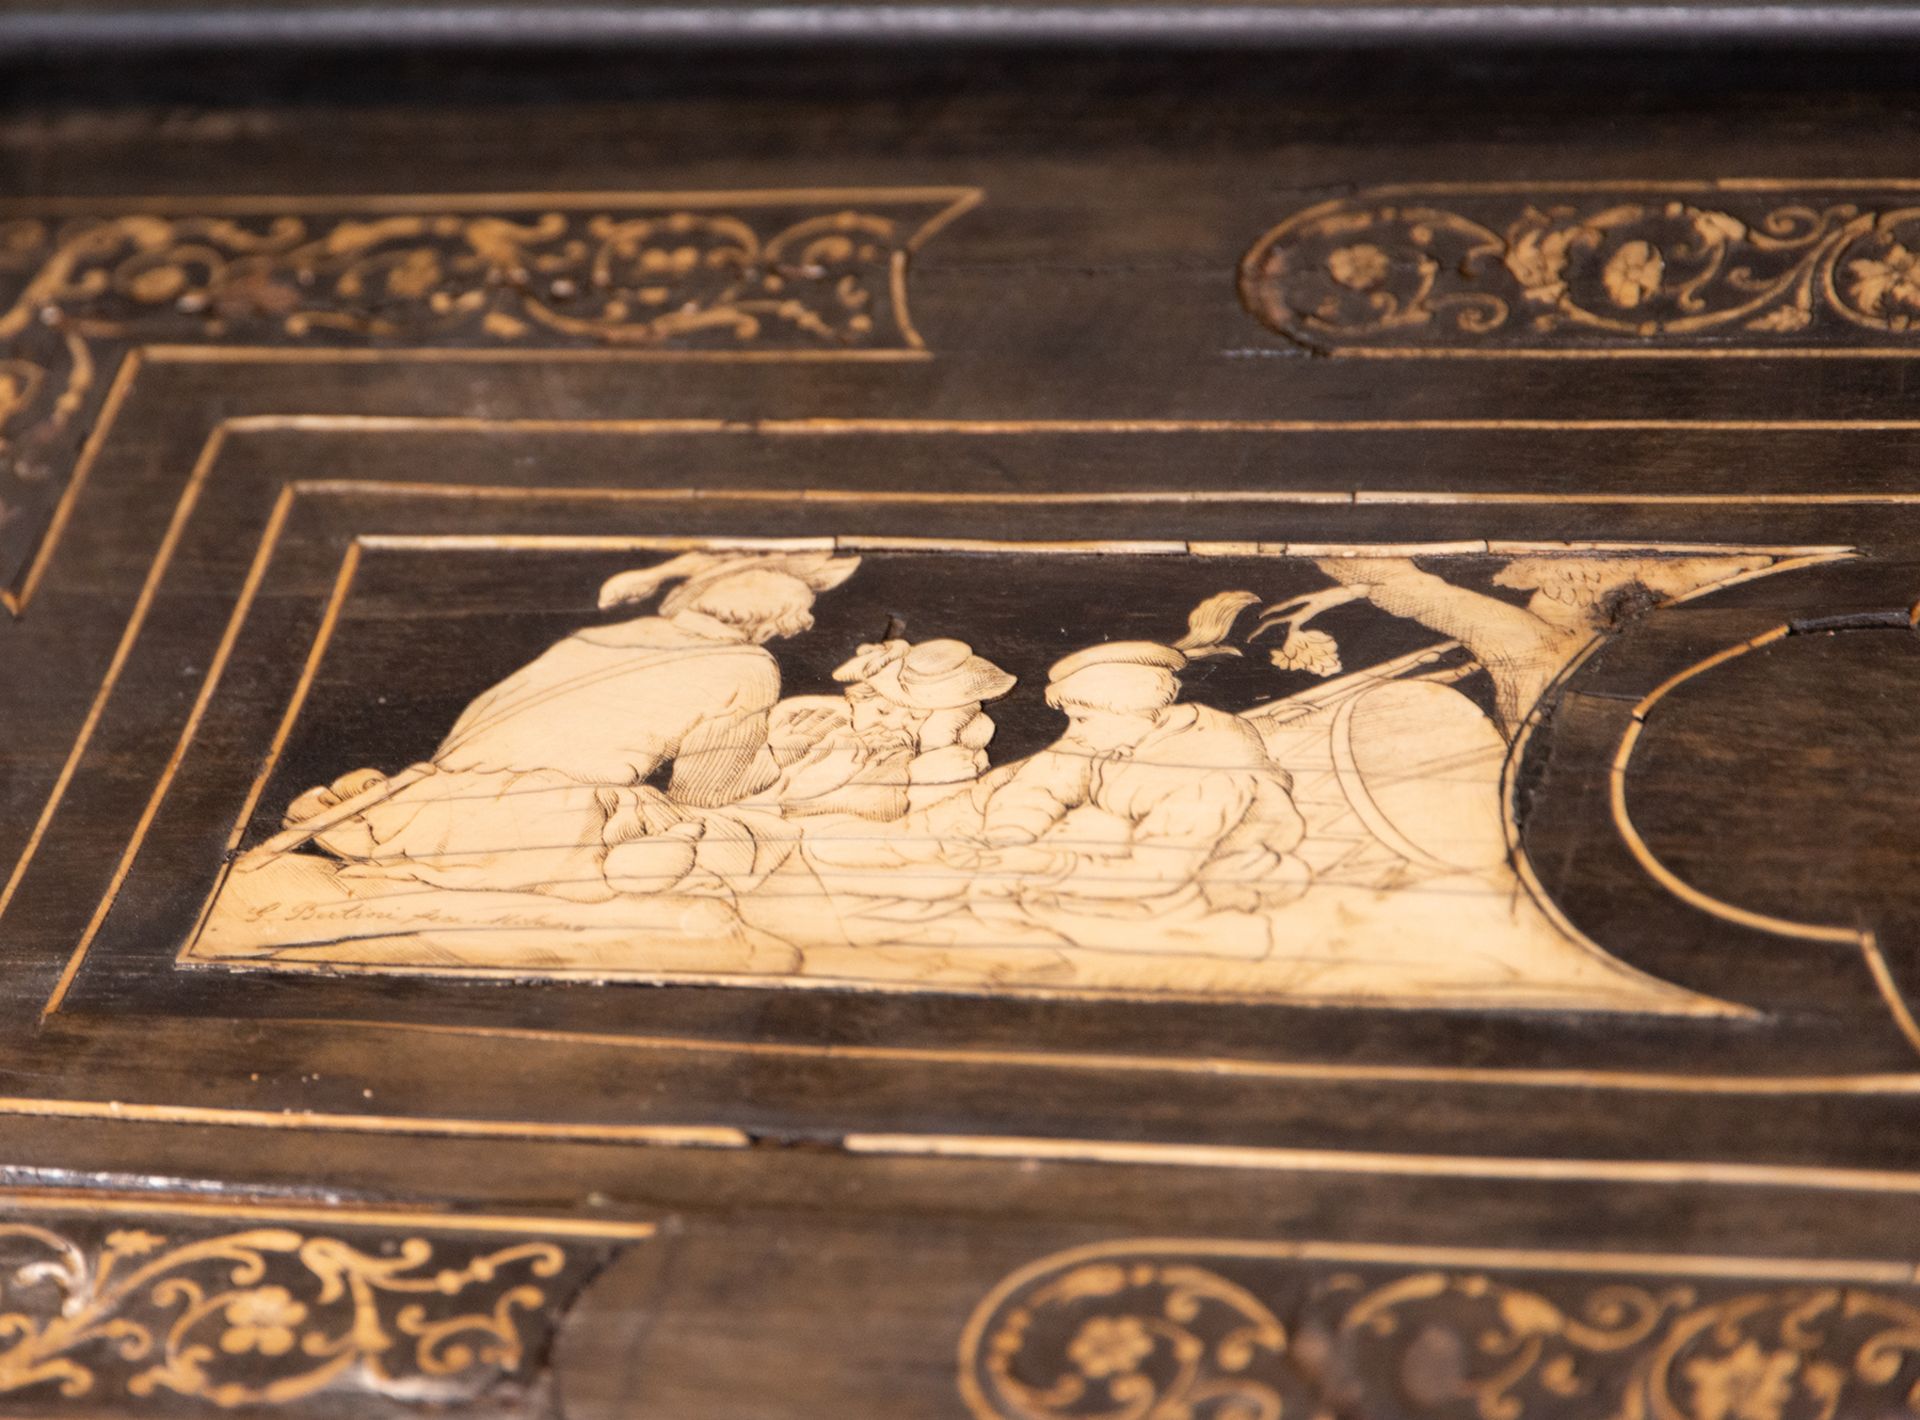 Exquisite Florentine Desk in ebony and bone inlay, signed Joseph Bertin(?)/Negt. de furniture ébene, - Image 4 of 9